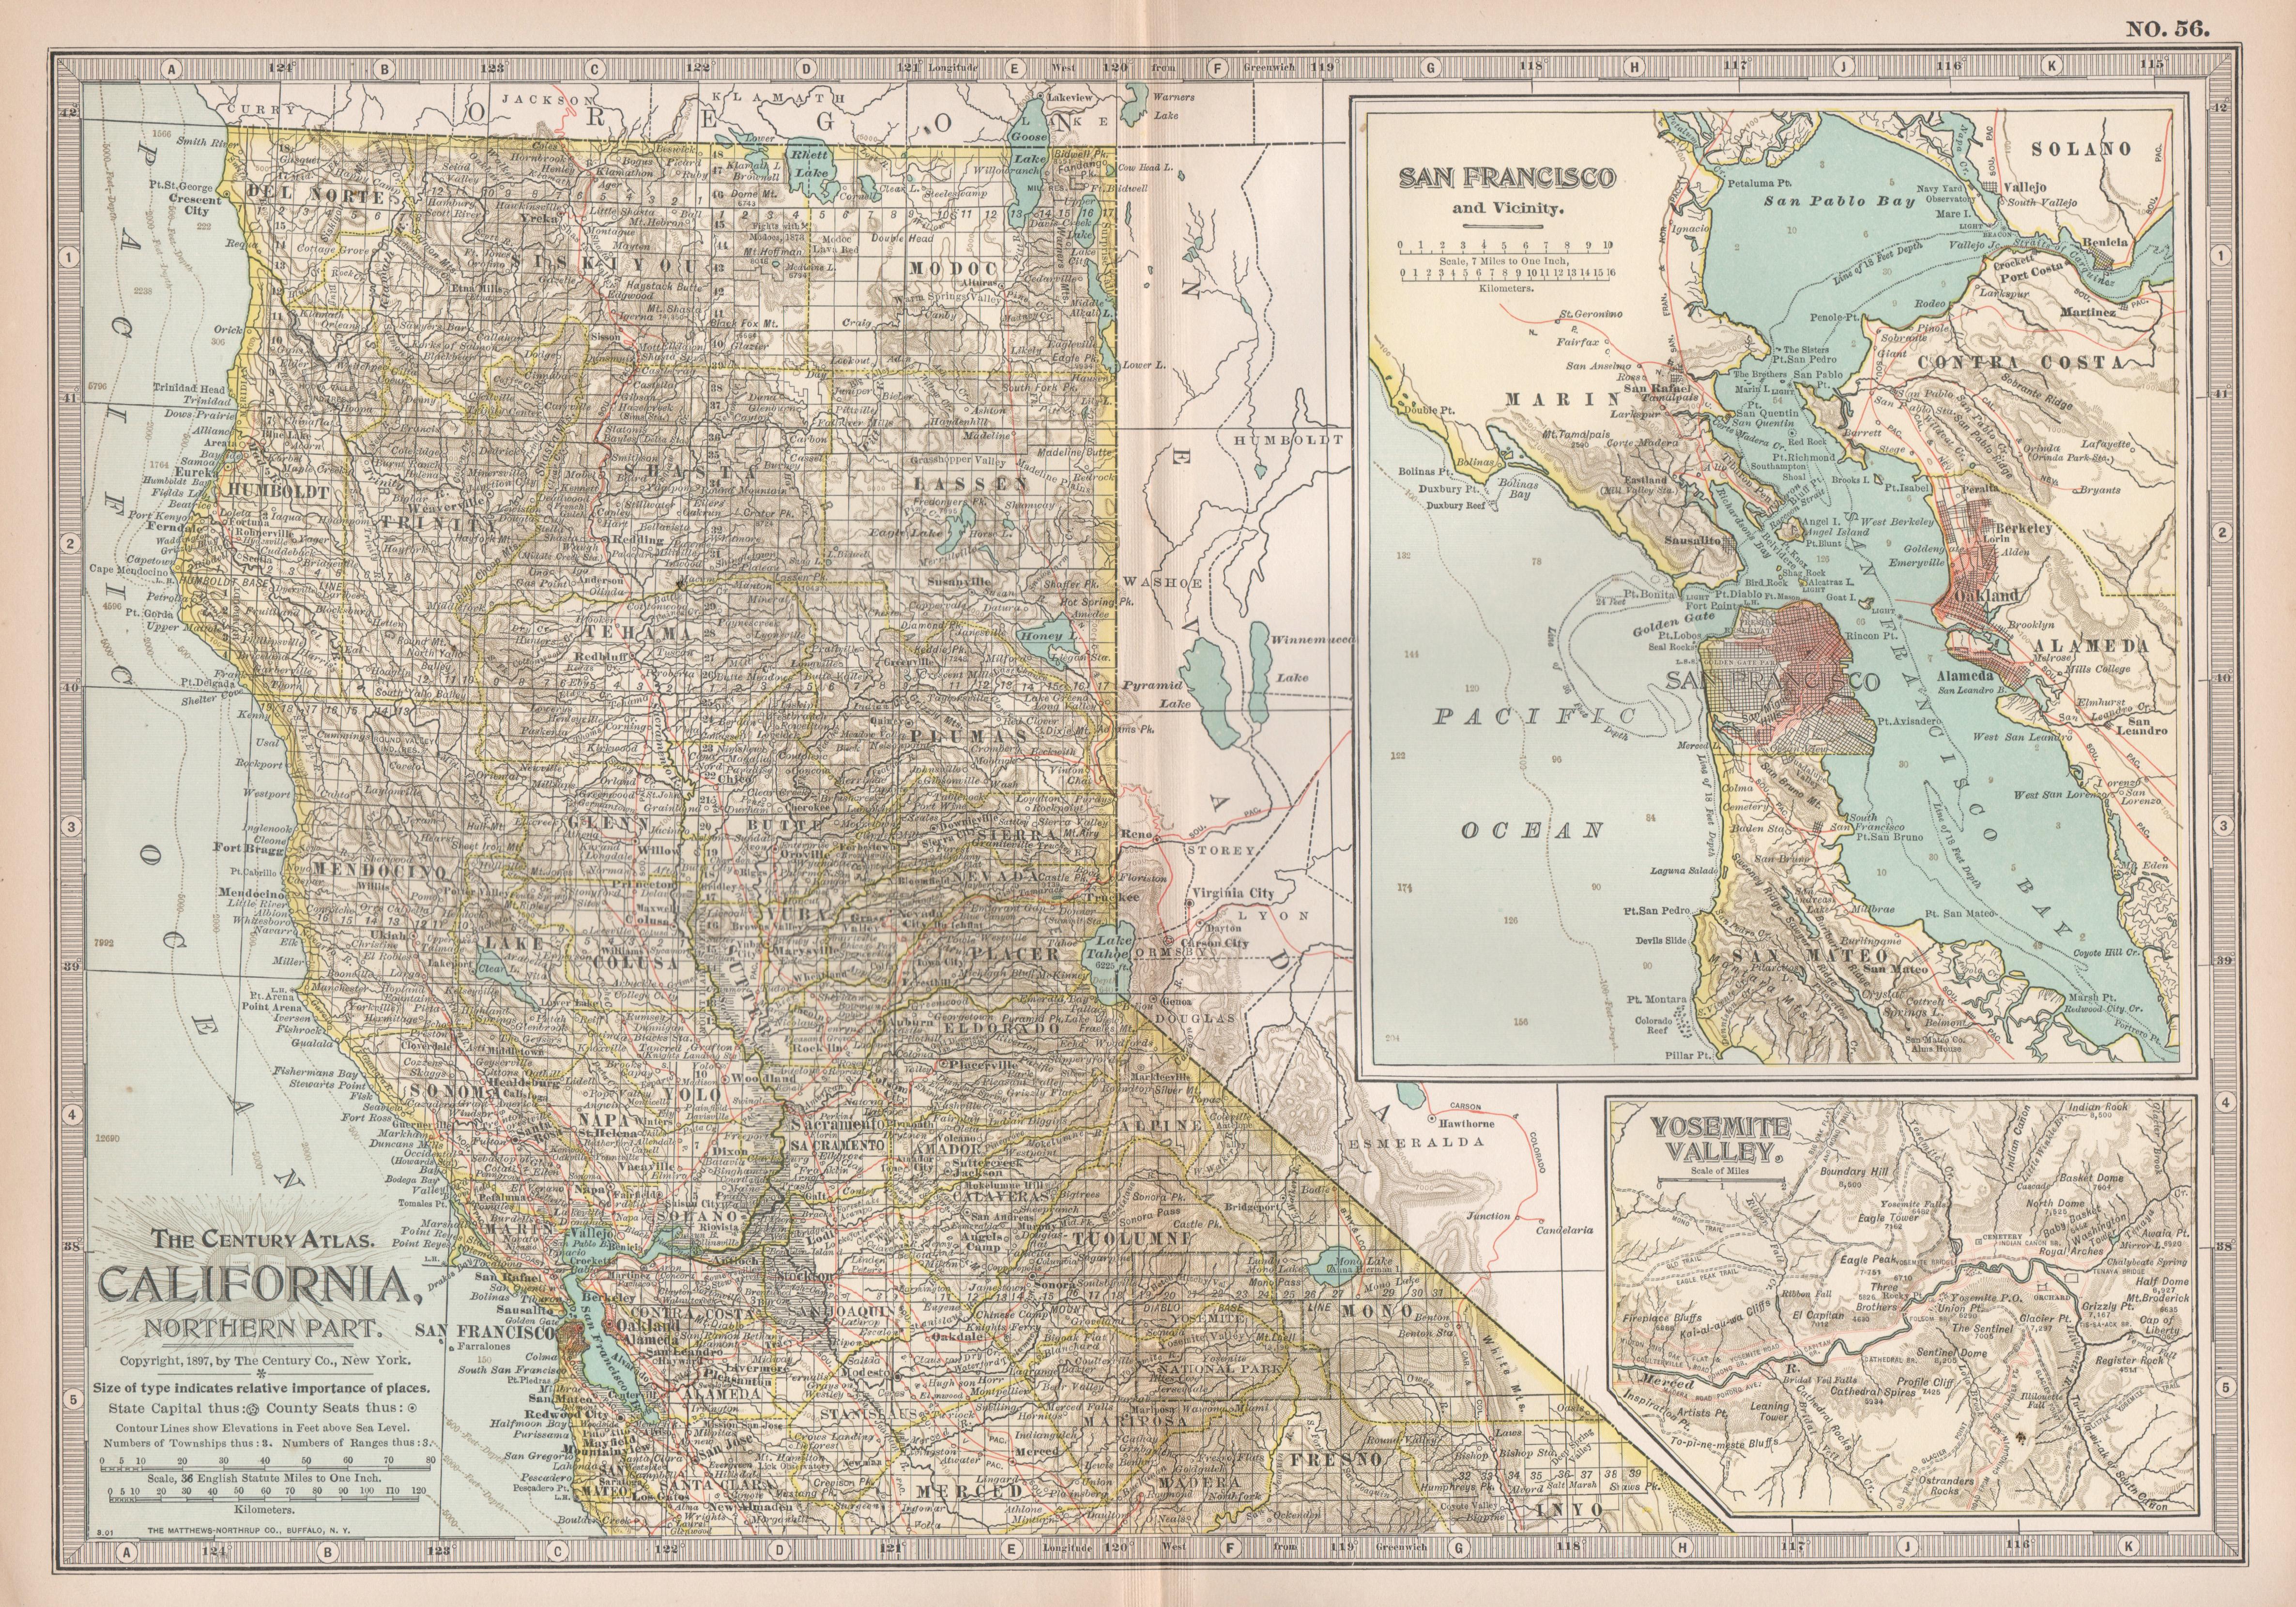 California, Northern Part. USA Century Atlas state antique vintage map